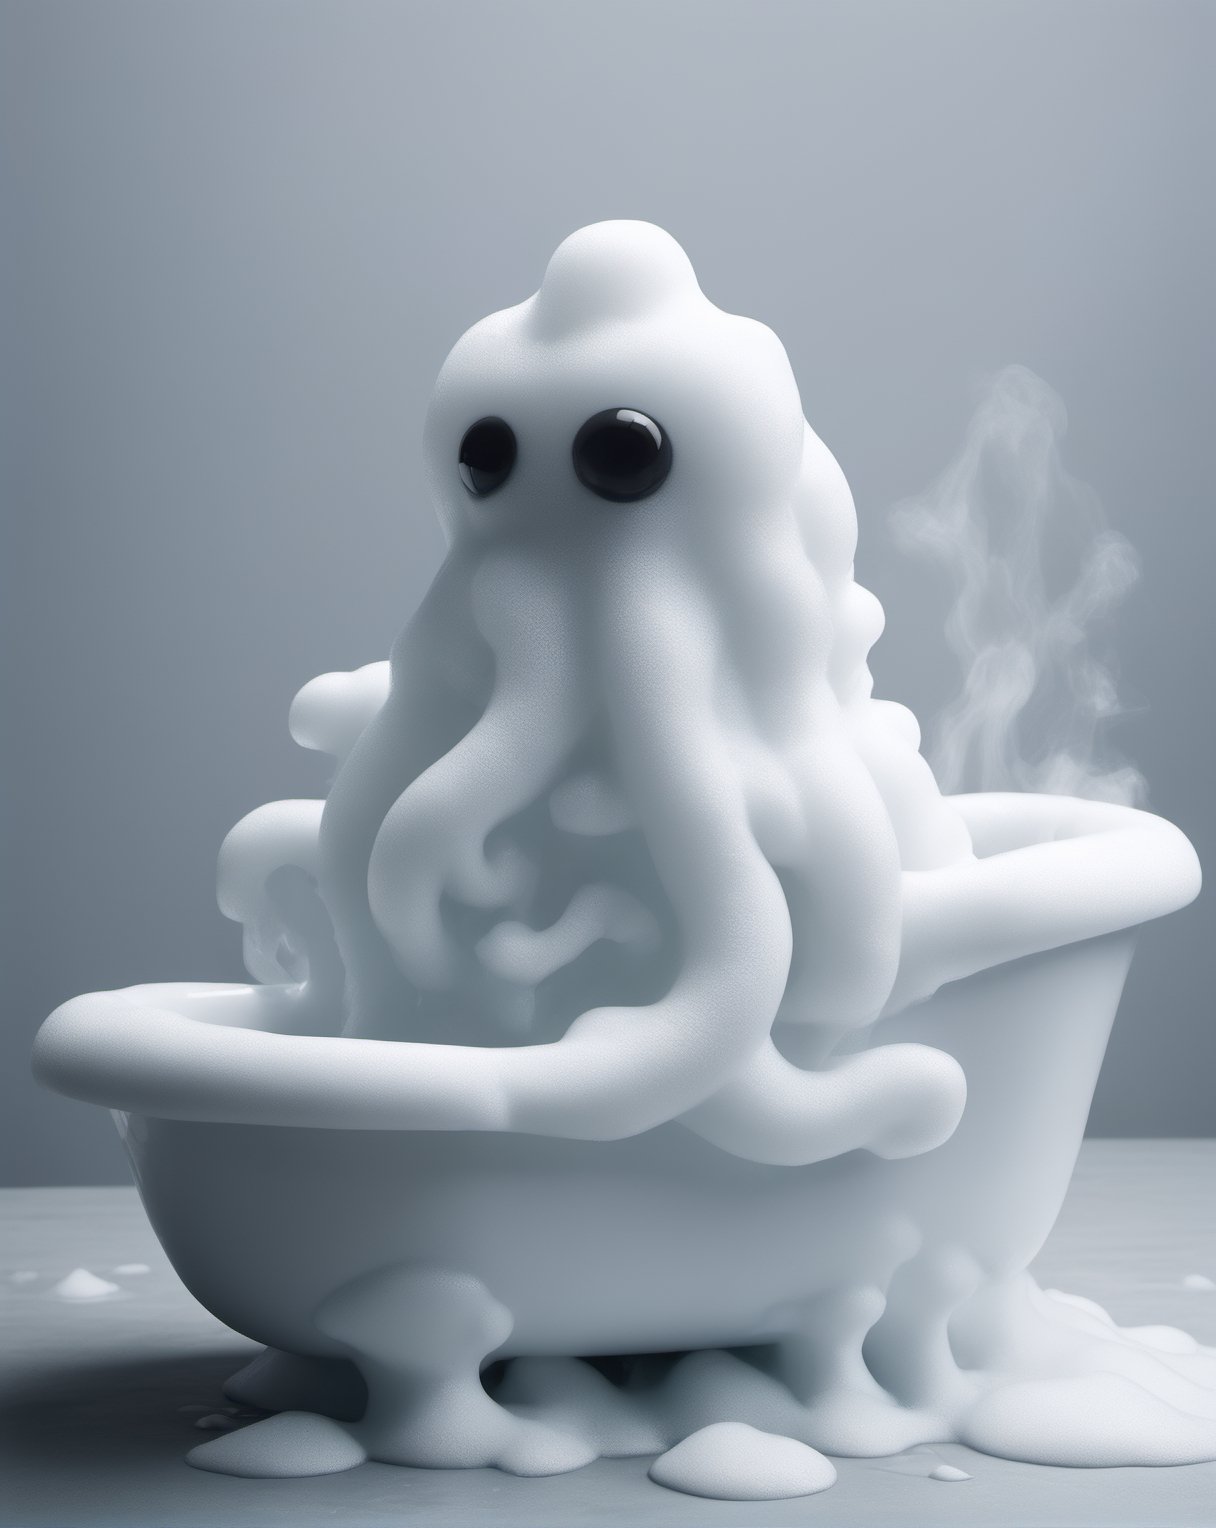 Photo of cute eldritch monster , made out of bath foam, taking a bath , Victorian style bath tub